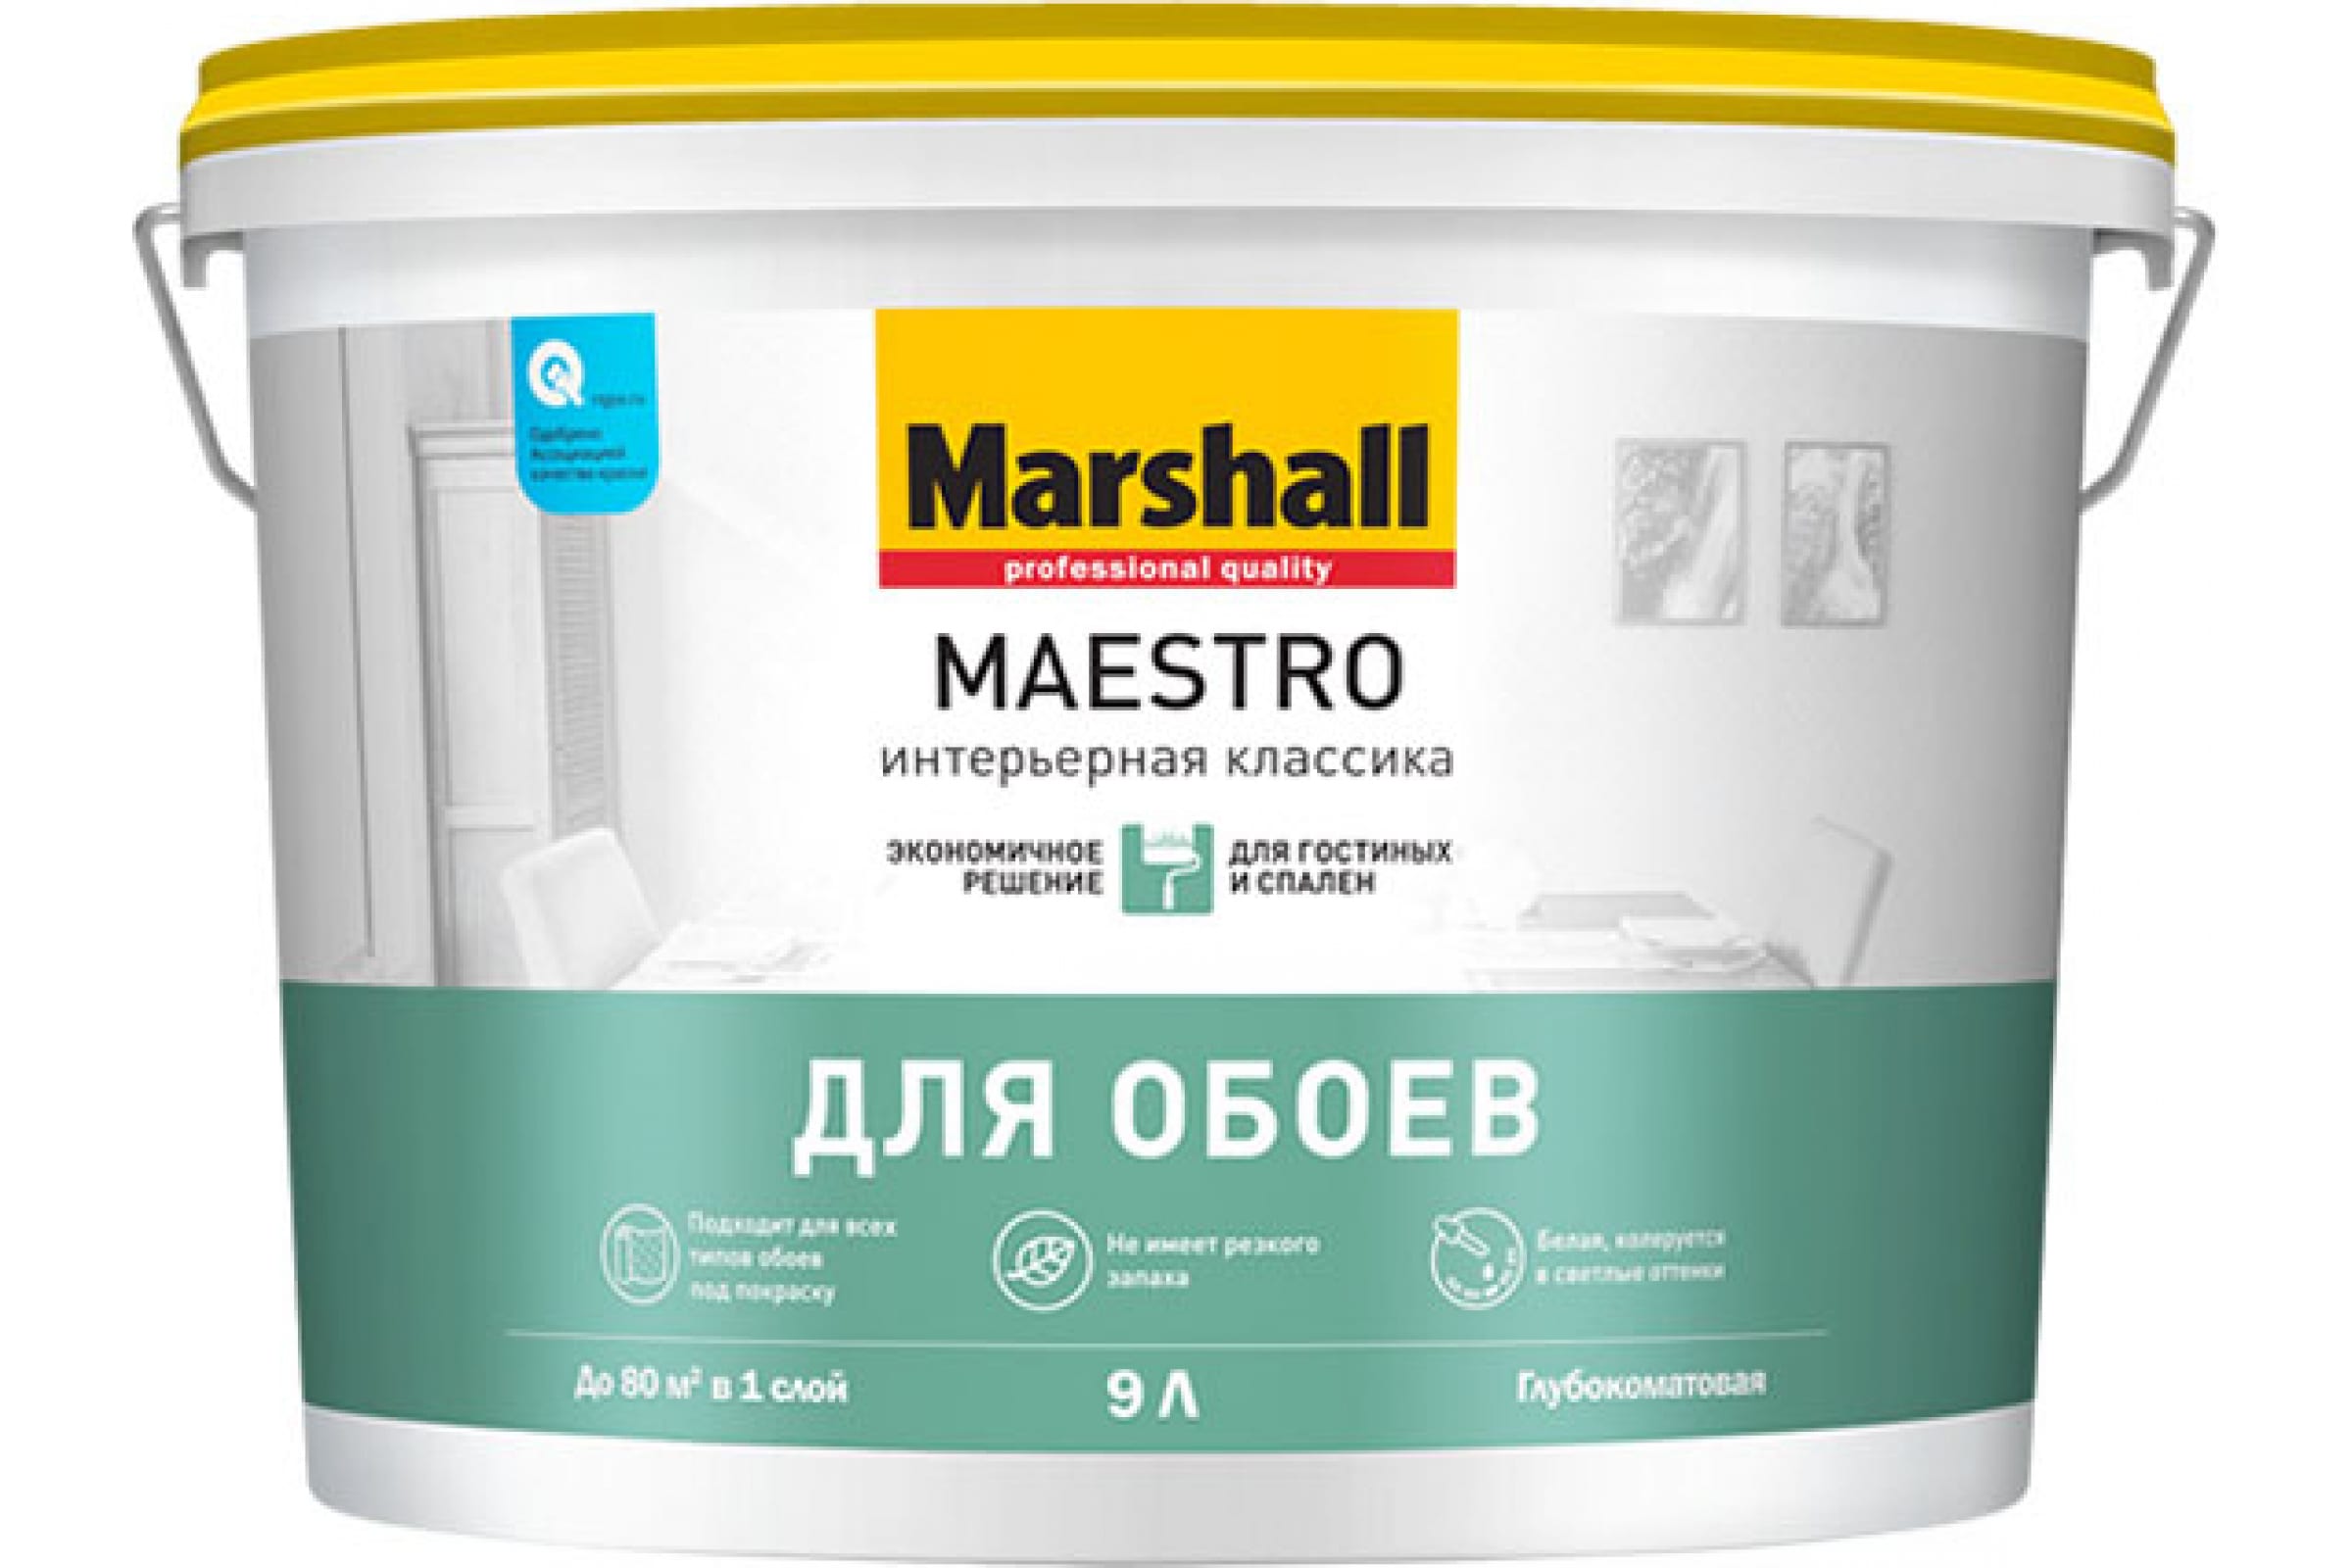 MARSHALL MAESTRO ИНТЕРЬЕРНАЯ КЛАССИКА краска для стен и потолков, глубокоматовая, база BW